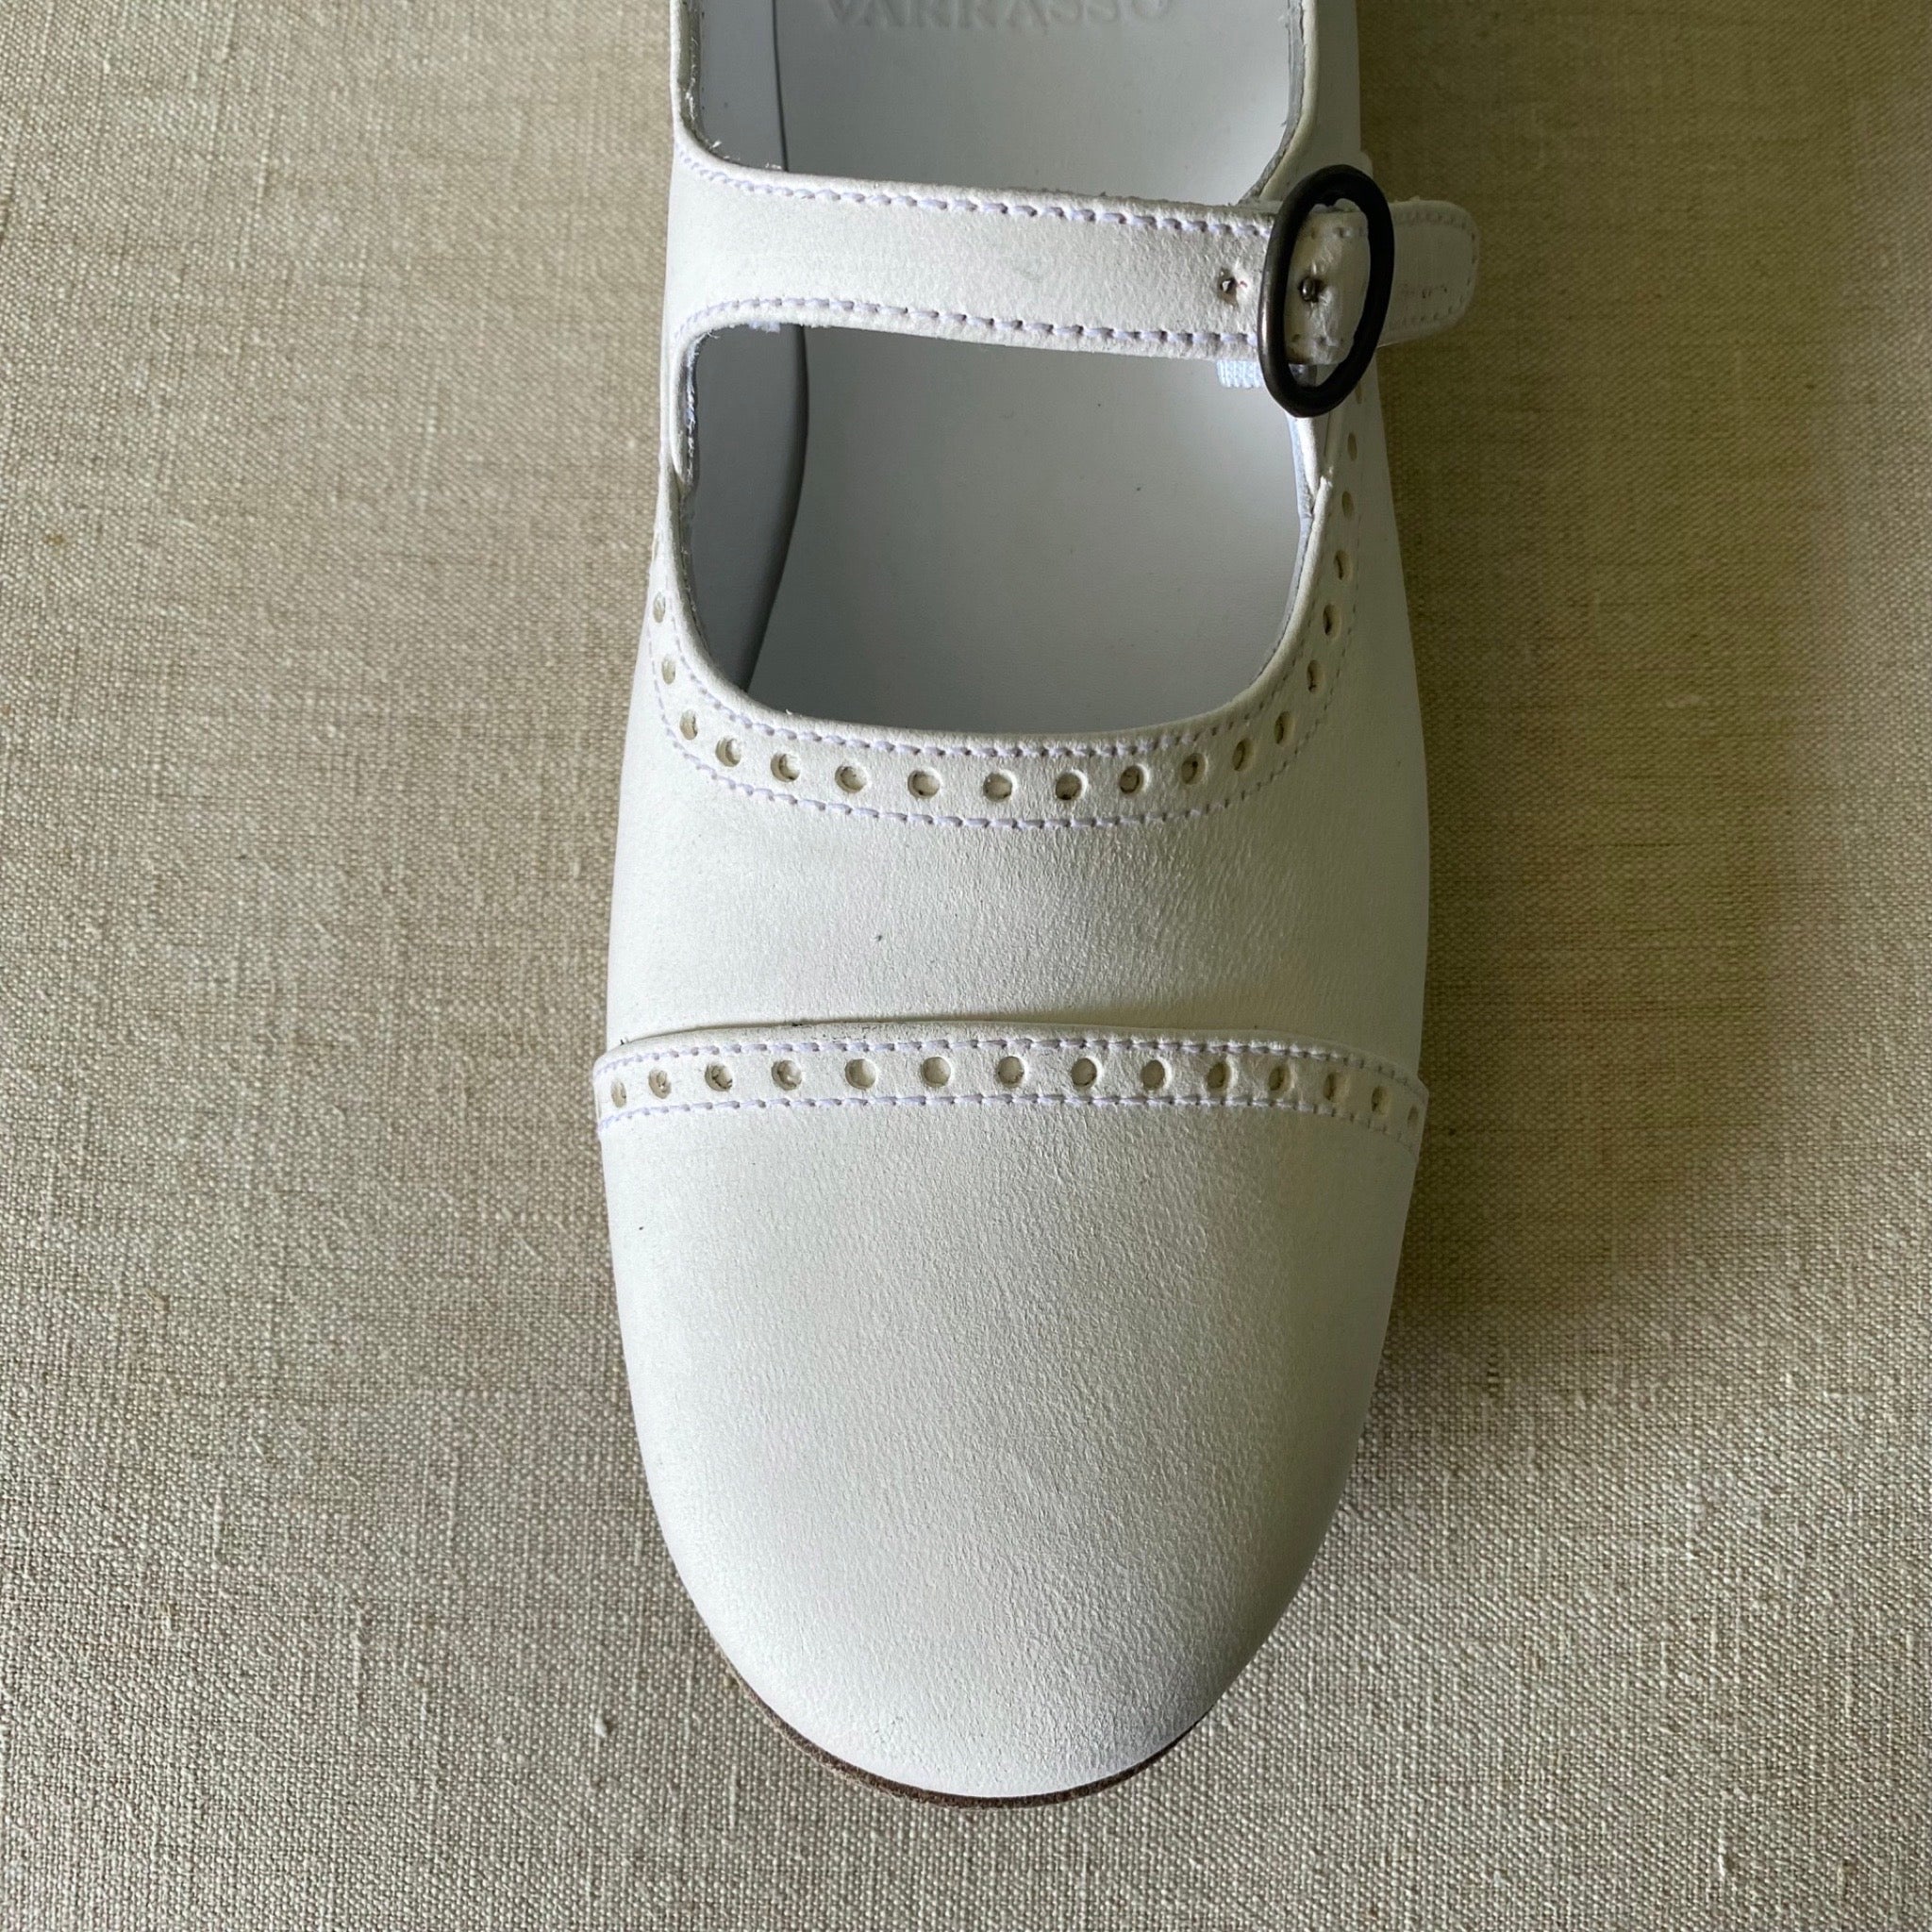 Victoria Varrasso Matte White Dolls Shoes